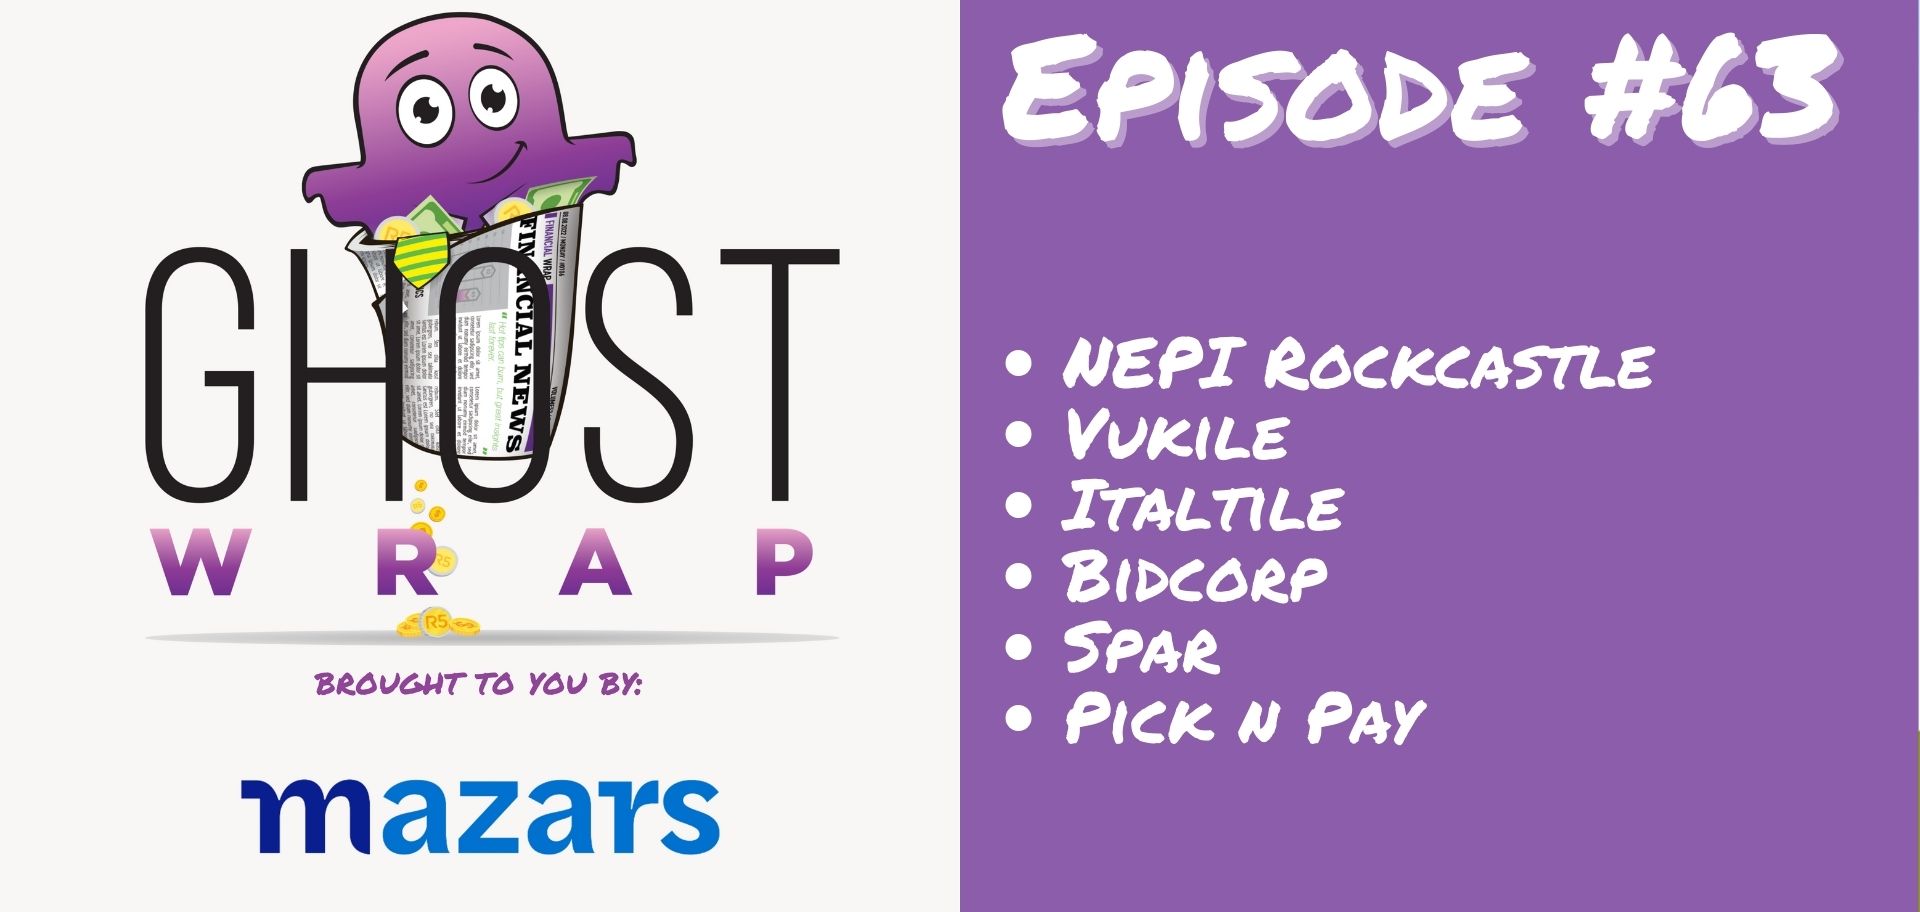 Ghost Wrap #63 (NEPI Rockcastle | Vukile | Italtile | Bidcorp | Spar | Pick n Pay)